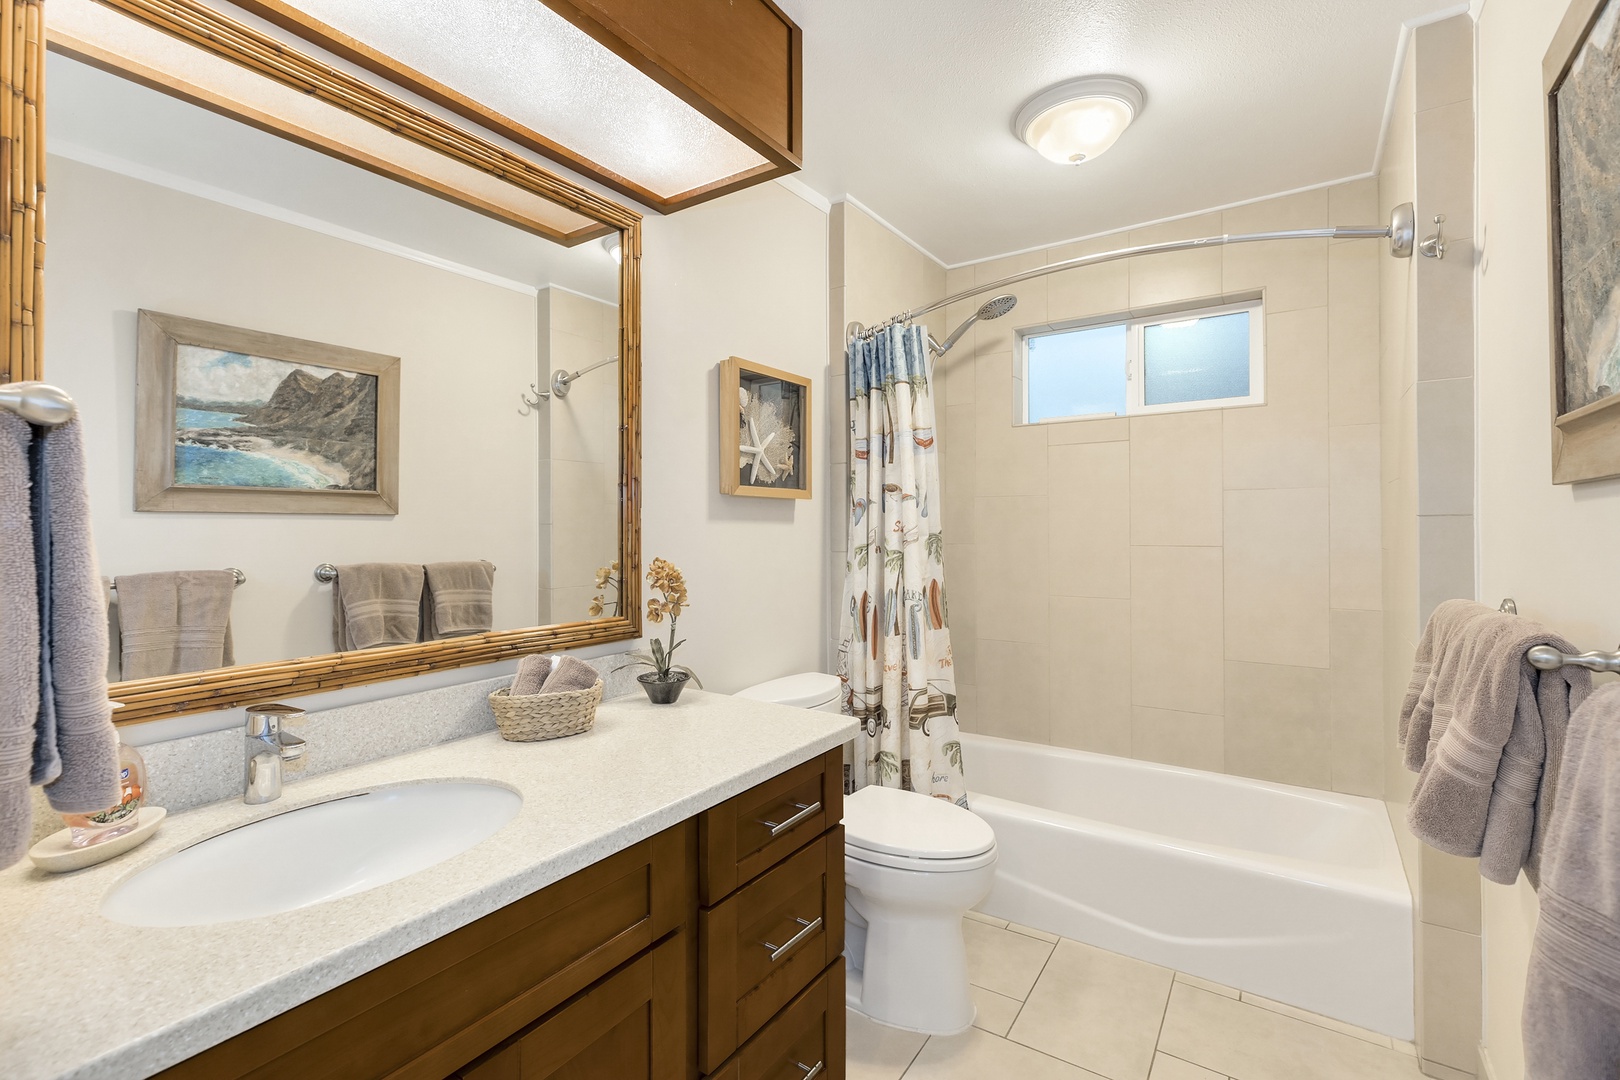 Haleiwa Vacation Rentals, Hale Kimo - Shared bathroom with a shower/tub combo